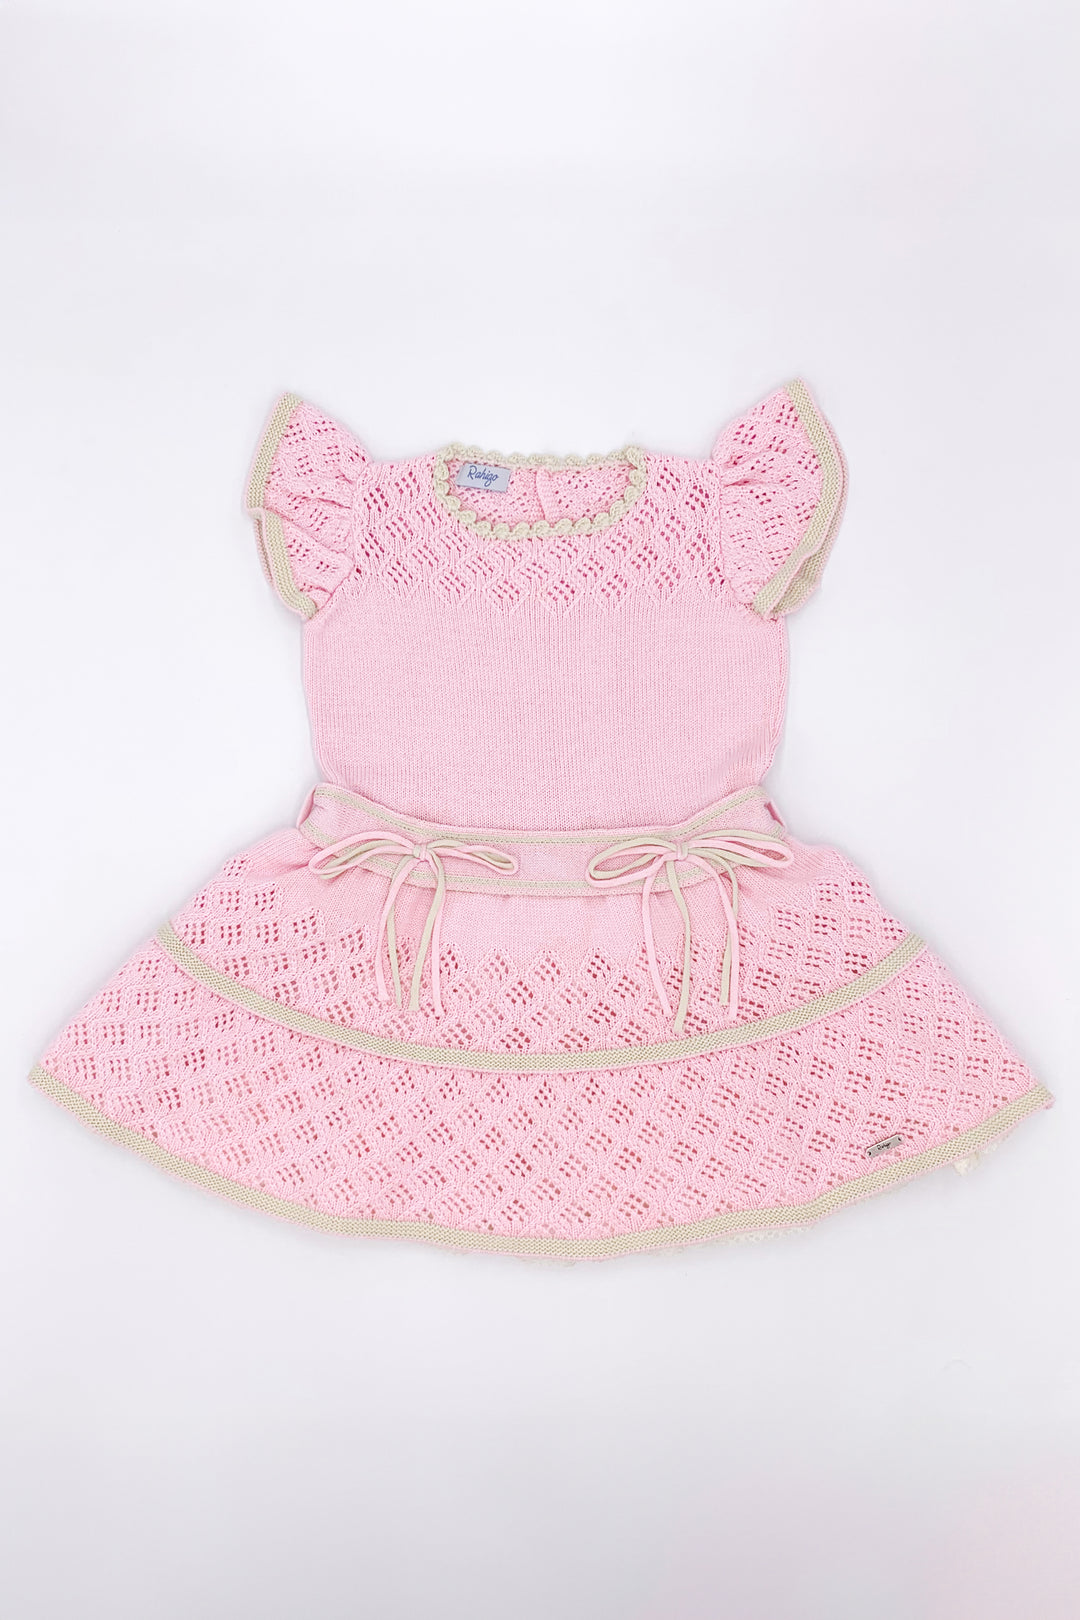 Rahigo PREORDER "Matilda" Baby Pink & Cream Knit Dress | Millie and John